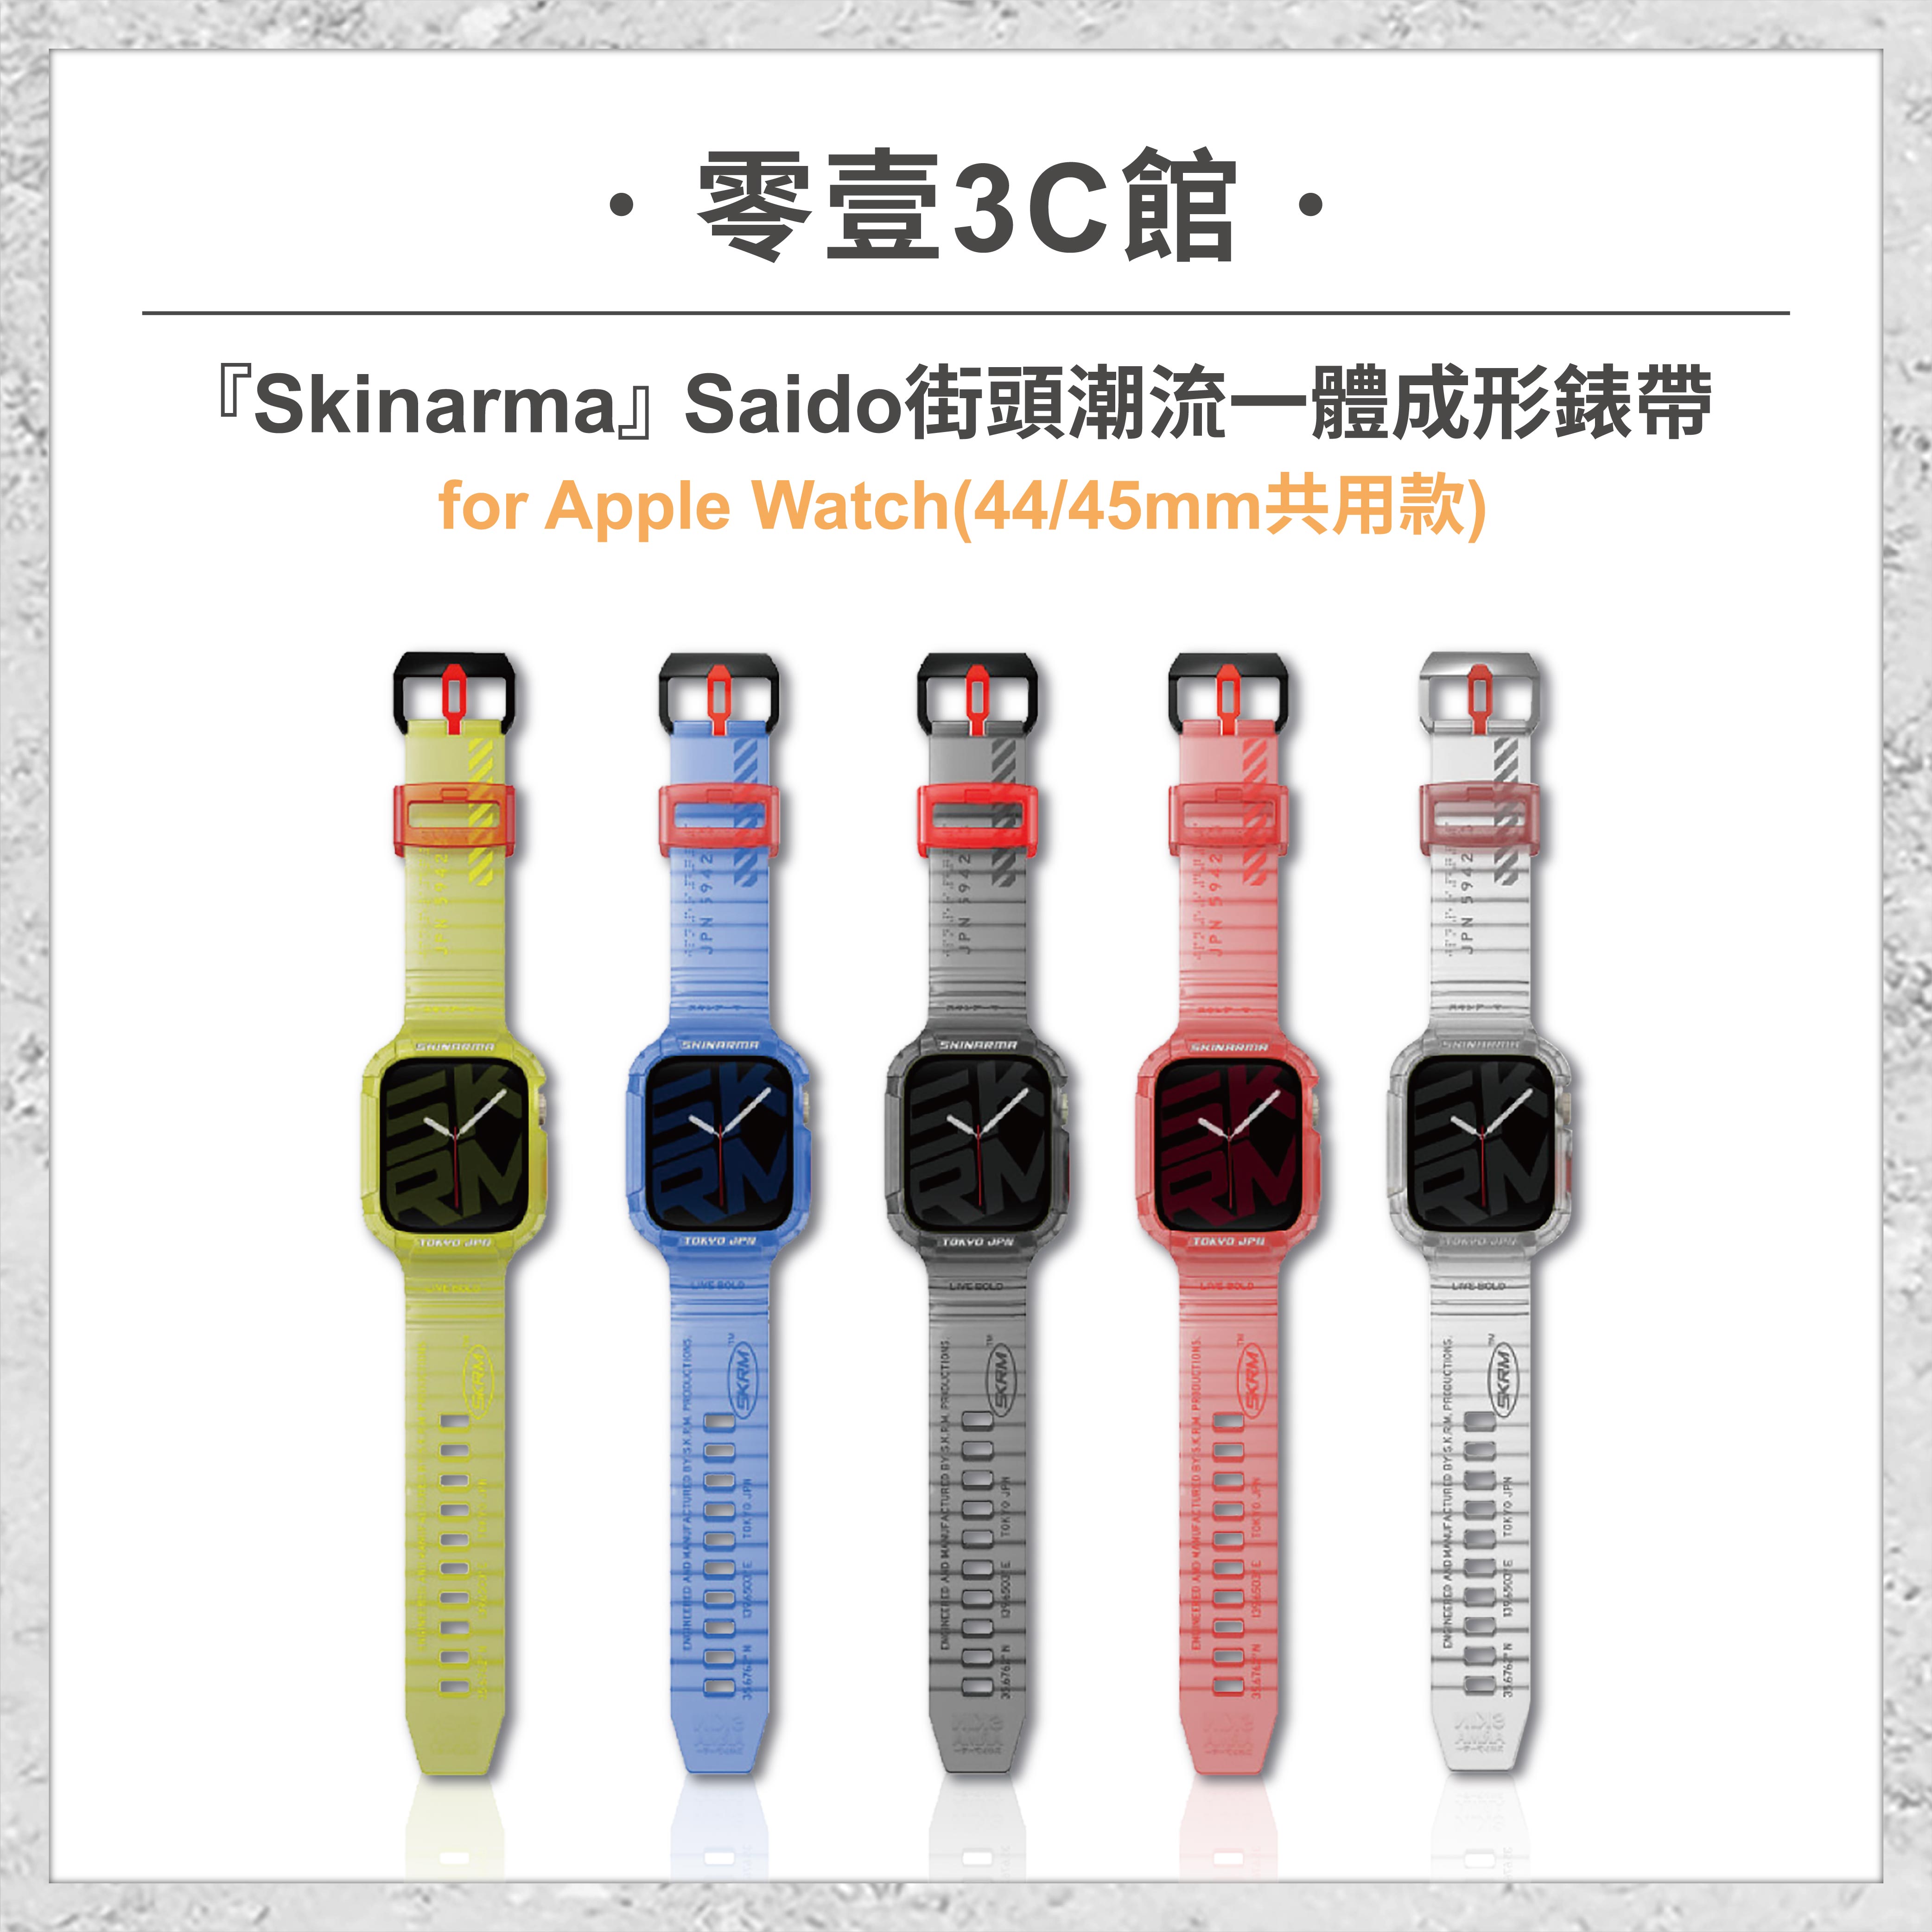 『Skinarma』Saido街頭潮流一體成形錶帶(44/45mm共用款)for Apple Watch 8/7/6/5/4/SE2